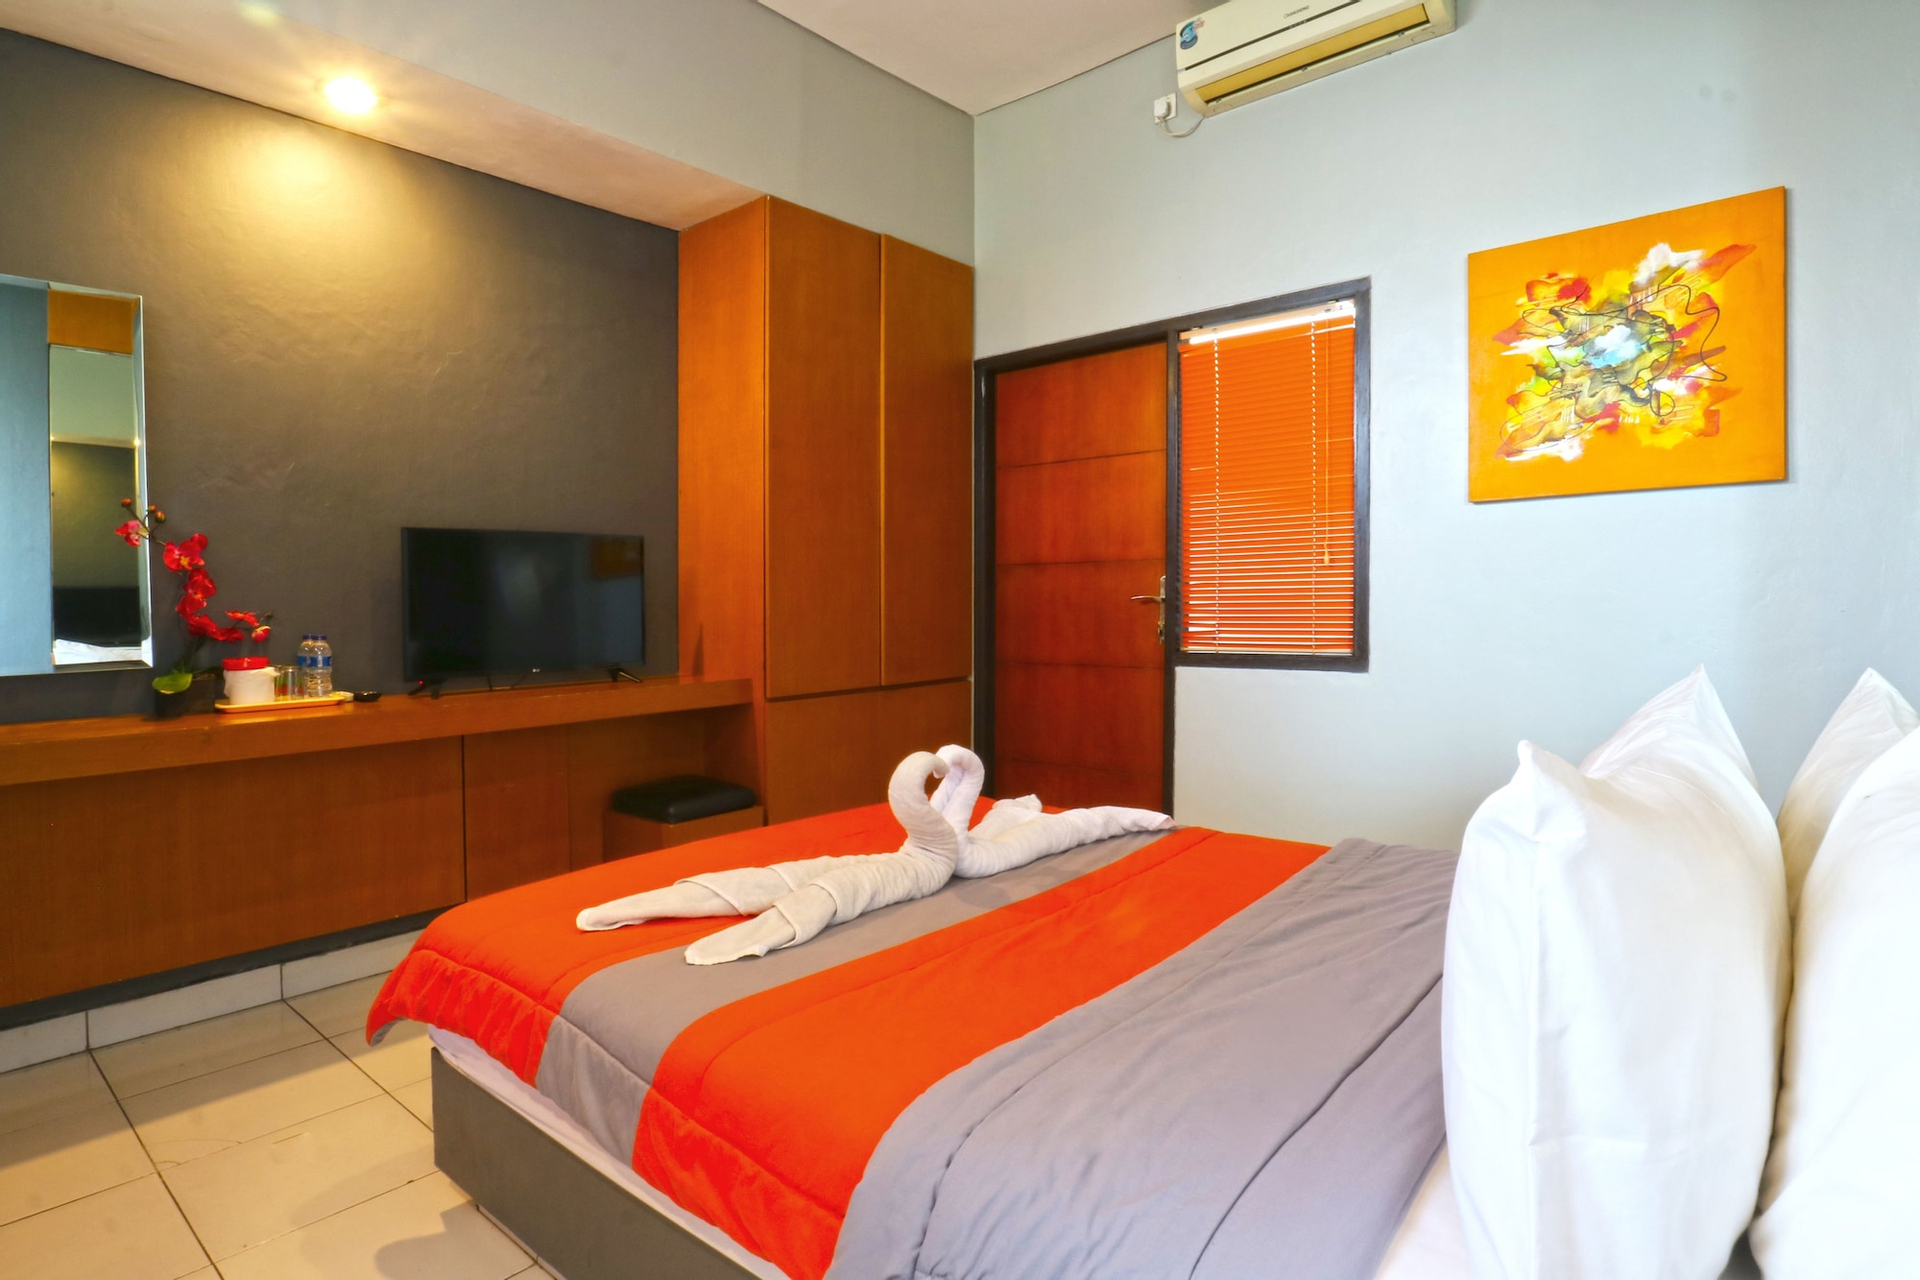 Bedroom 3, Sayang Residence 2, Denpasar